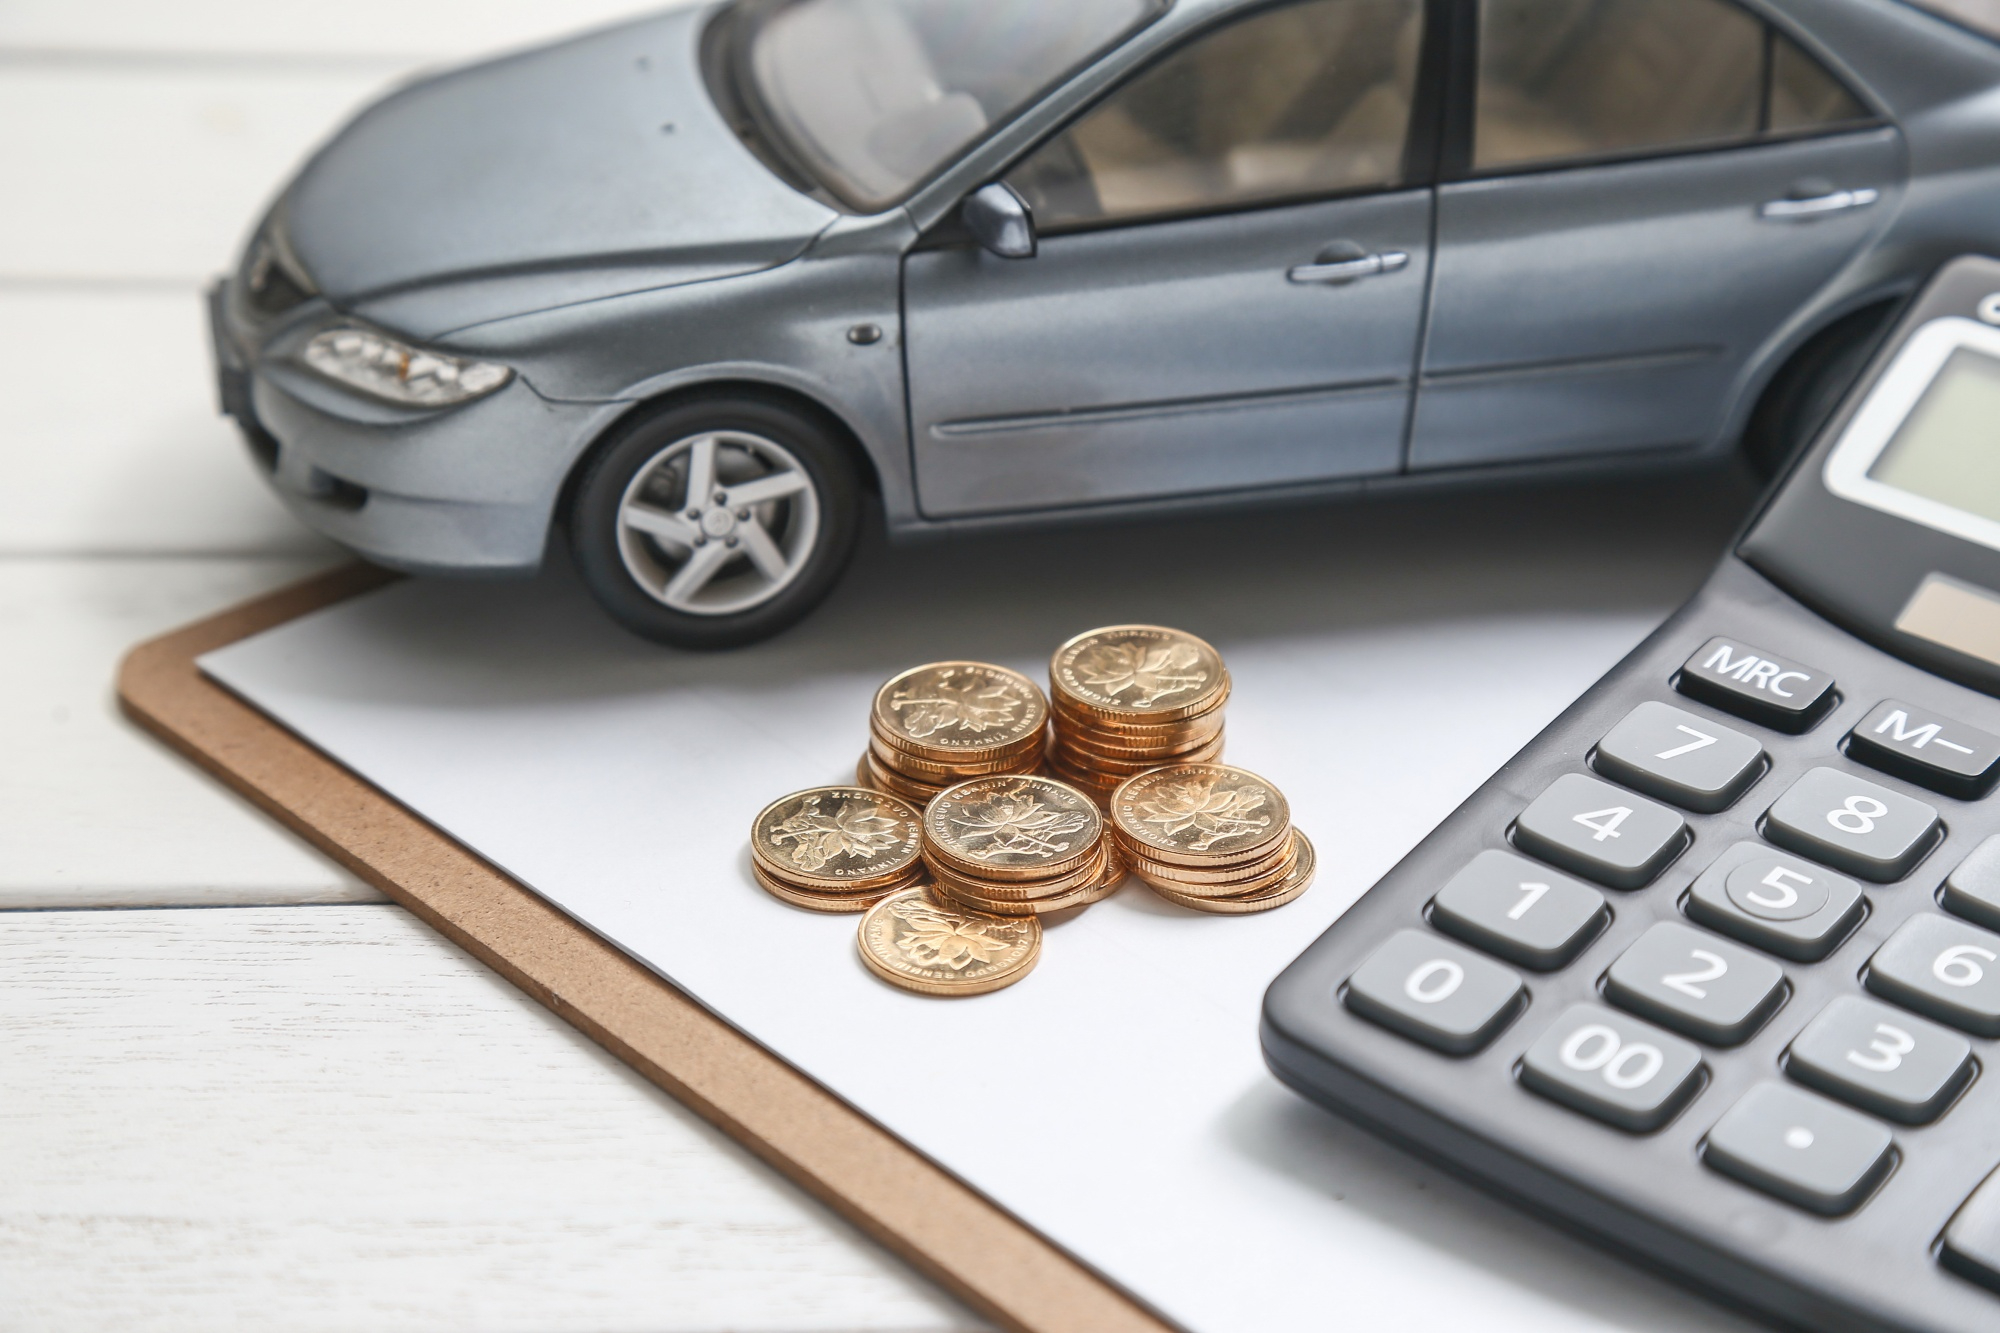 Budget Car Rental: Save on Affordable Car Hire